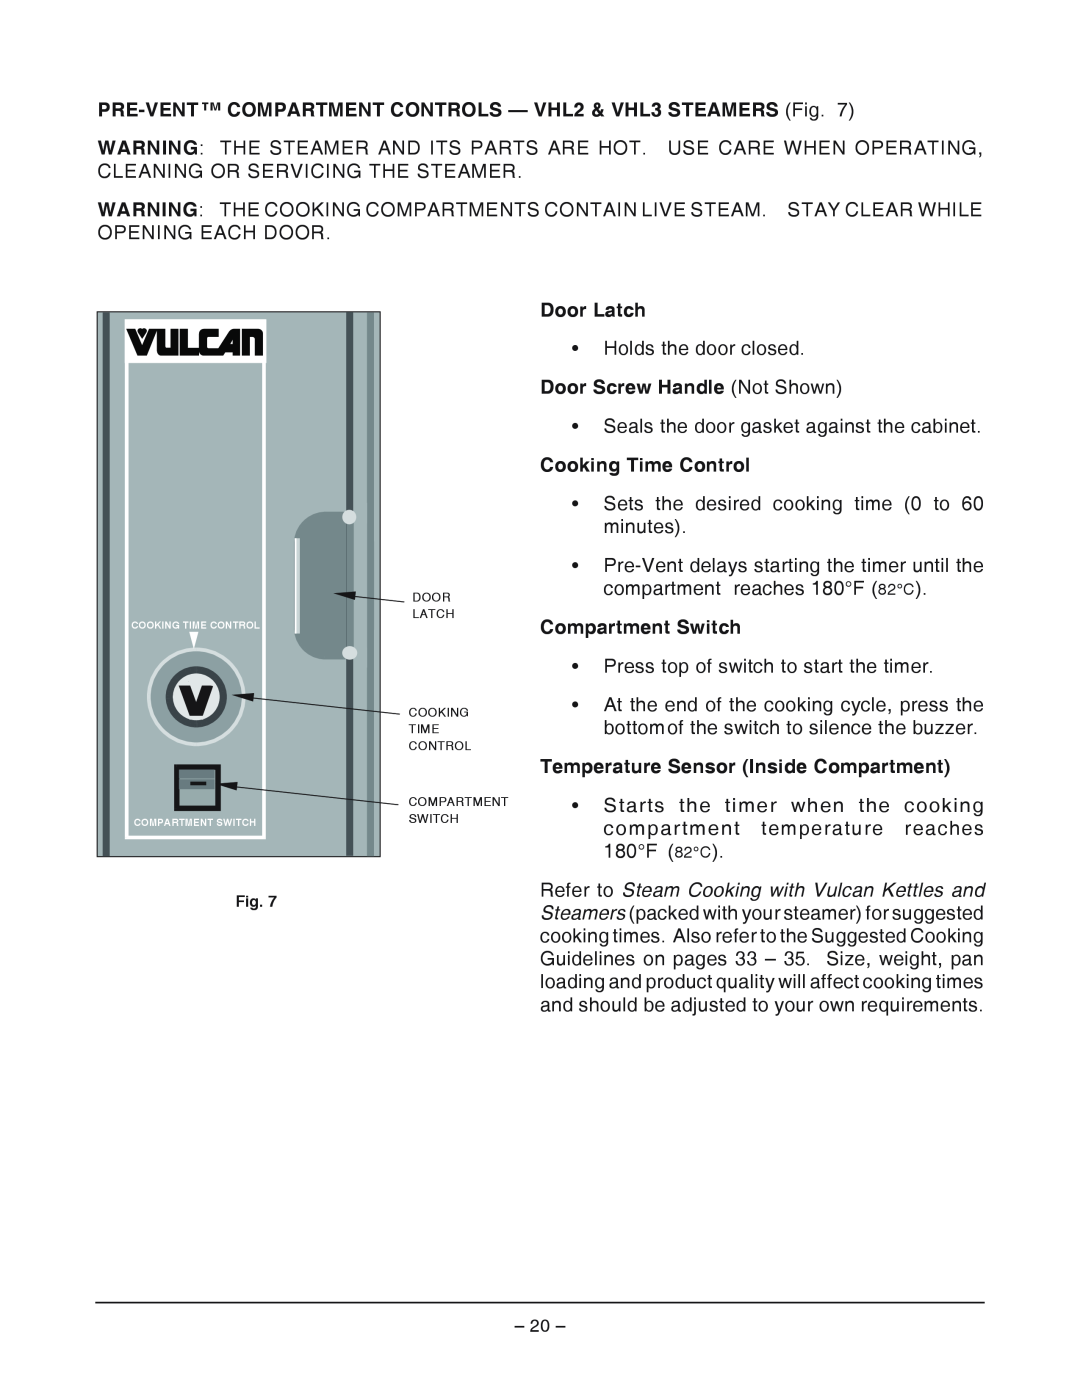 Vulcan-Hart VHL3 & VH3616, VHX24, VHL2 Door Latch, Door Screw Handle Not Shown, Cooking Time Control, Compartment Switch 